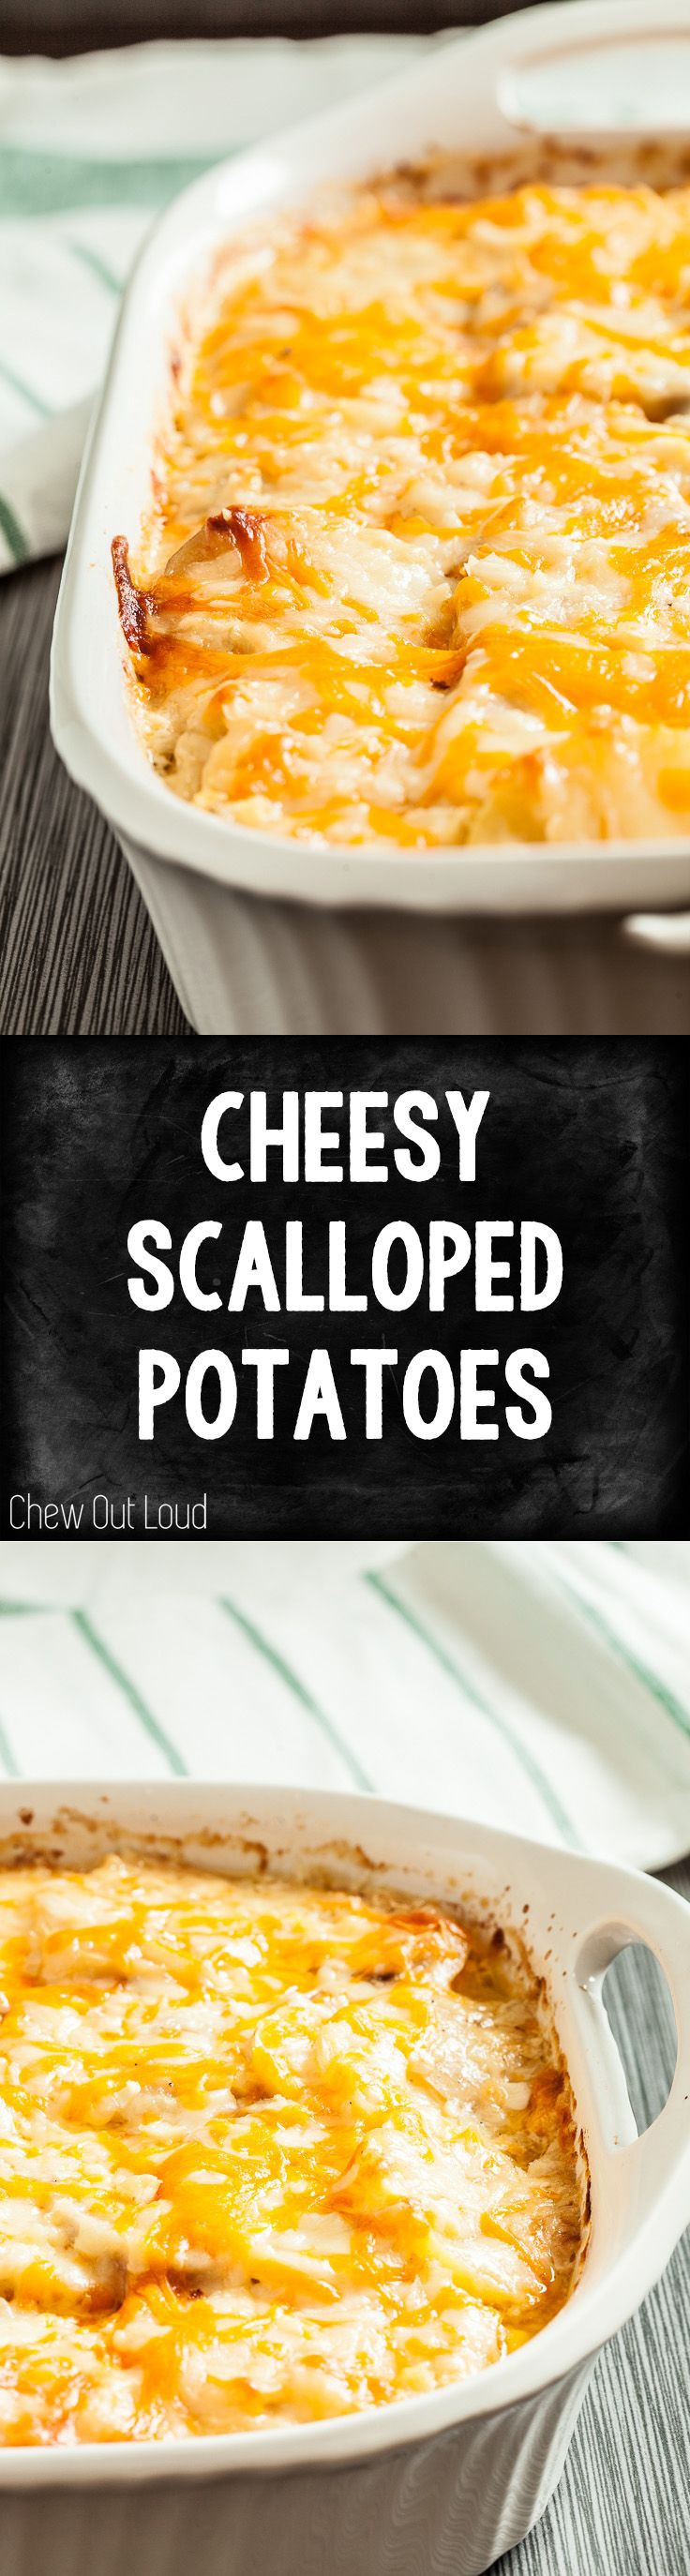 Make Ahead Breakfast Potatoes
 Best 25 Make ahead scalloped potatoes ideas on Pinterest